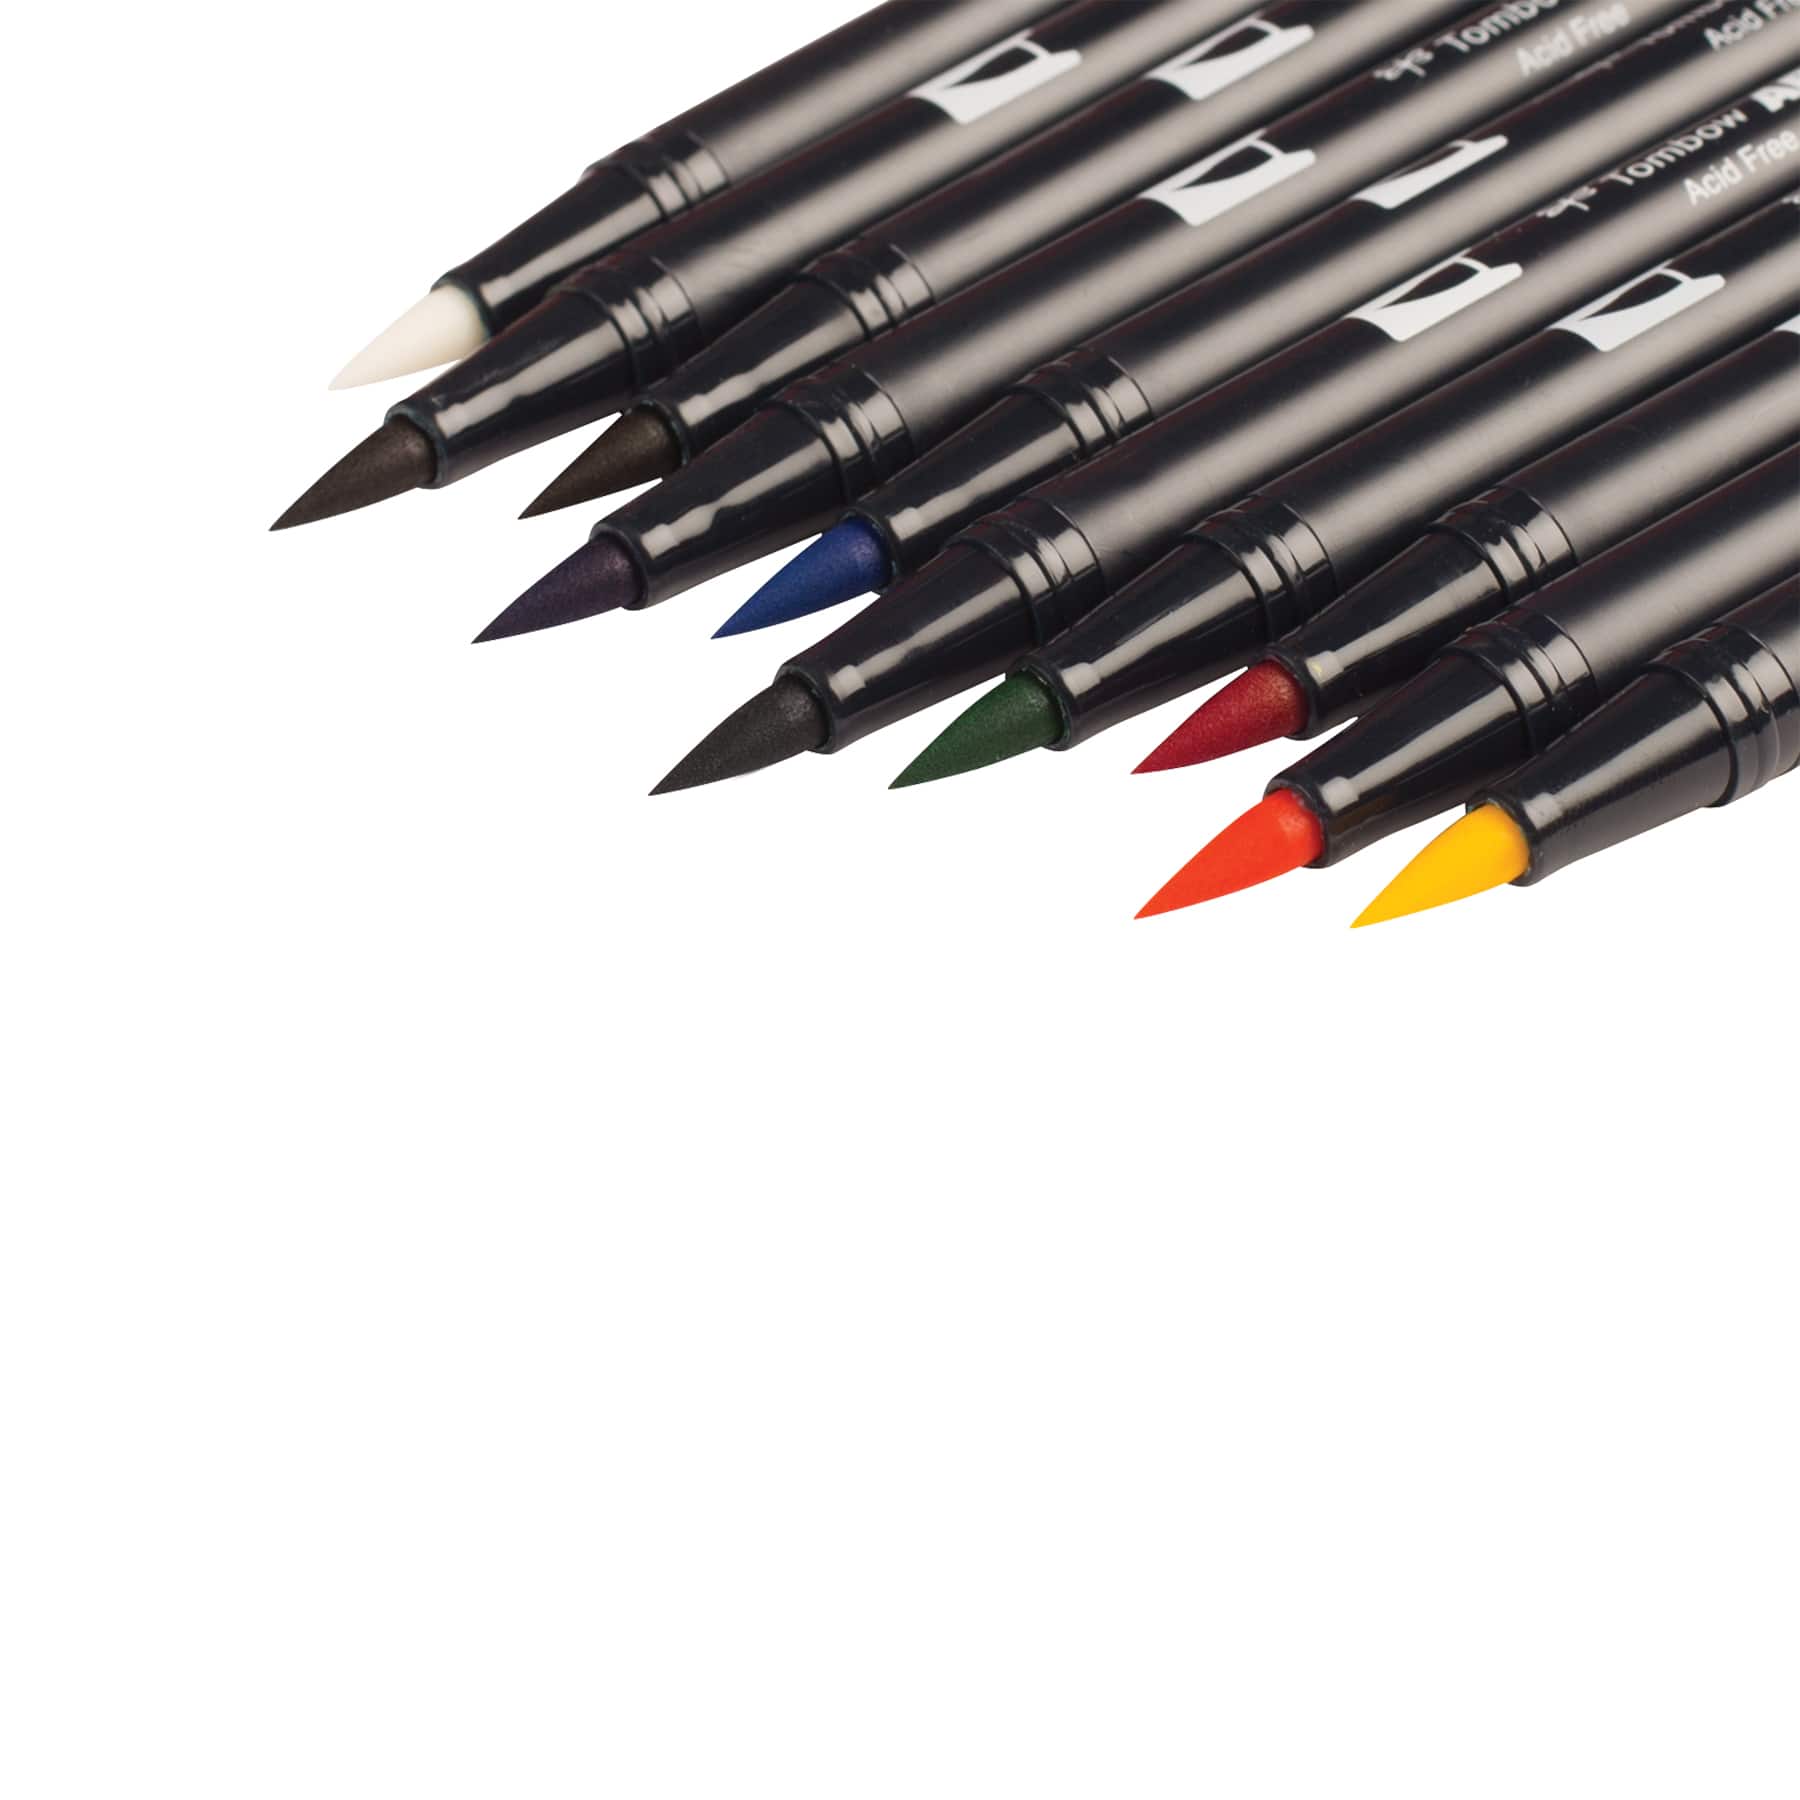 Tombow Primary Palette Dual Brush Pen Set